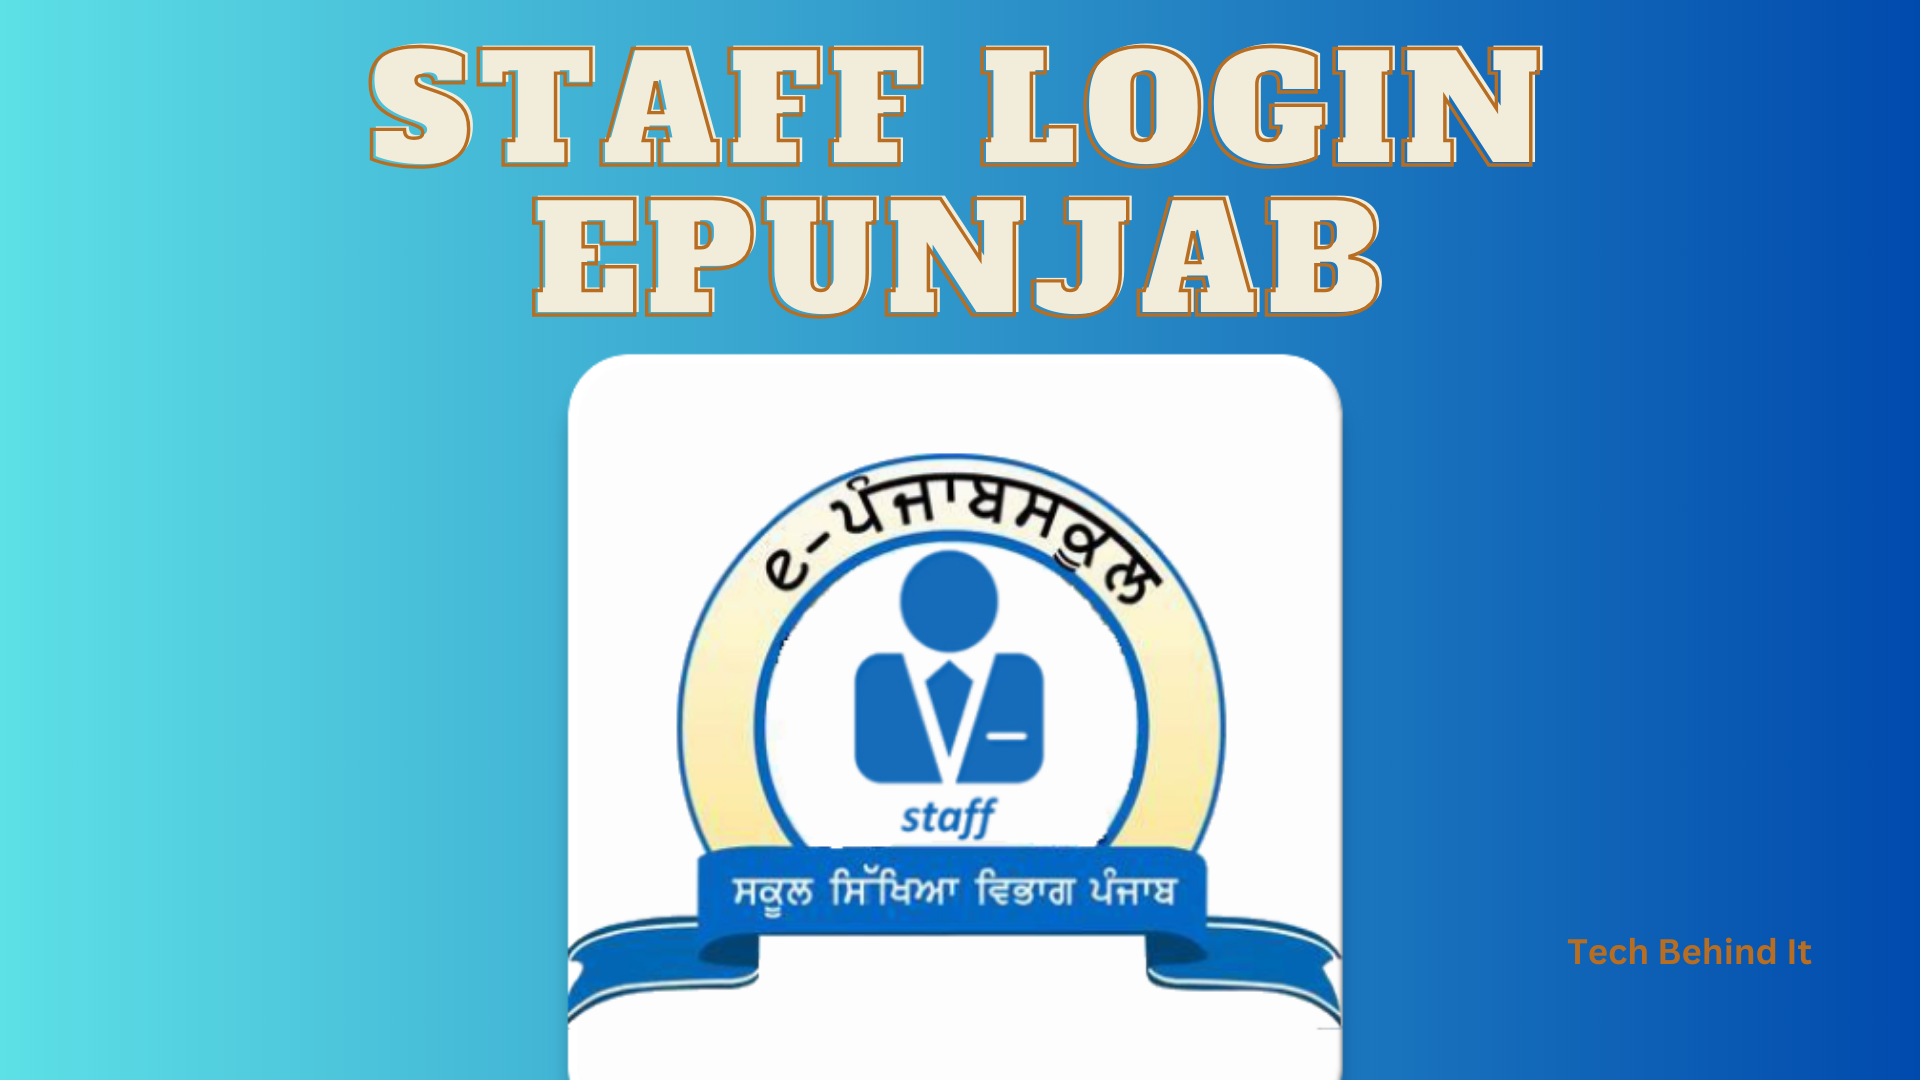 Staff login ePunjab School: An online service portal for educational purposes 